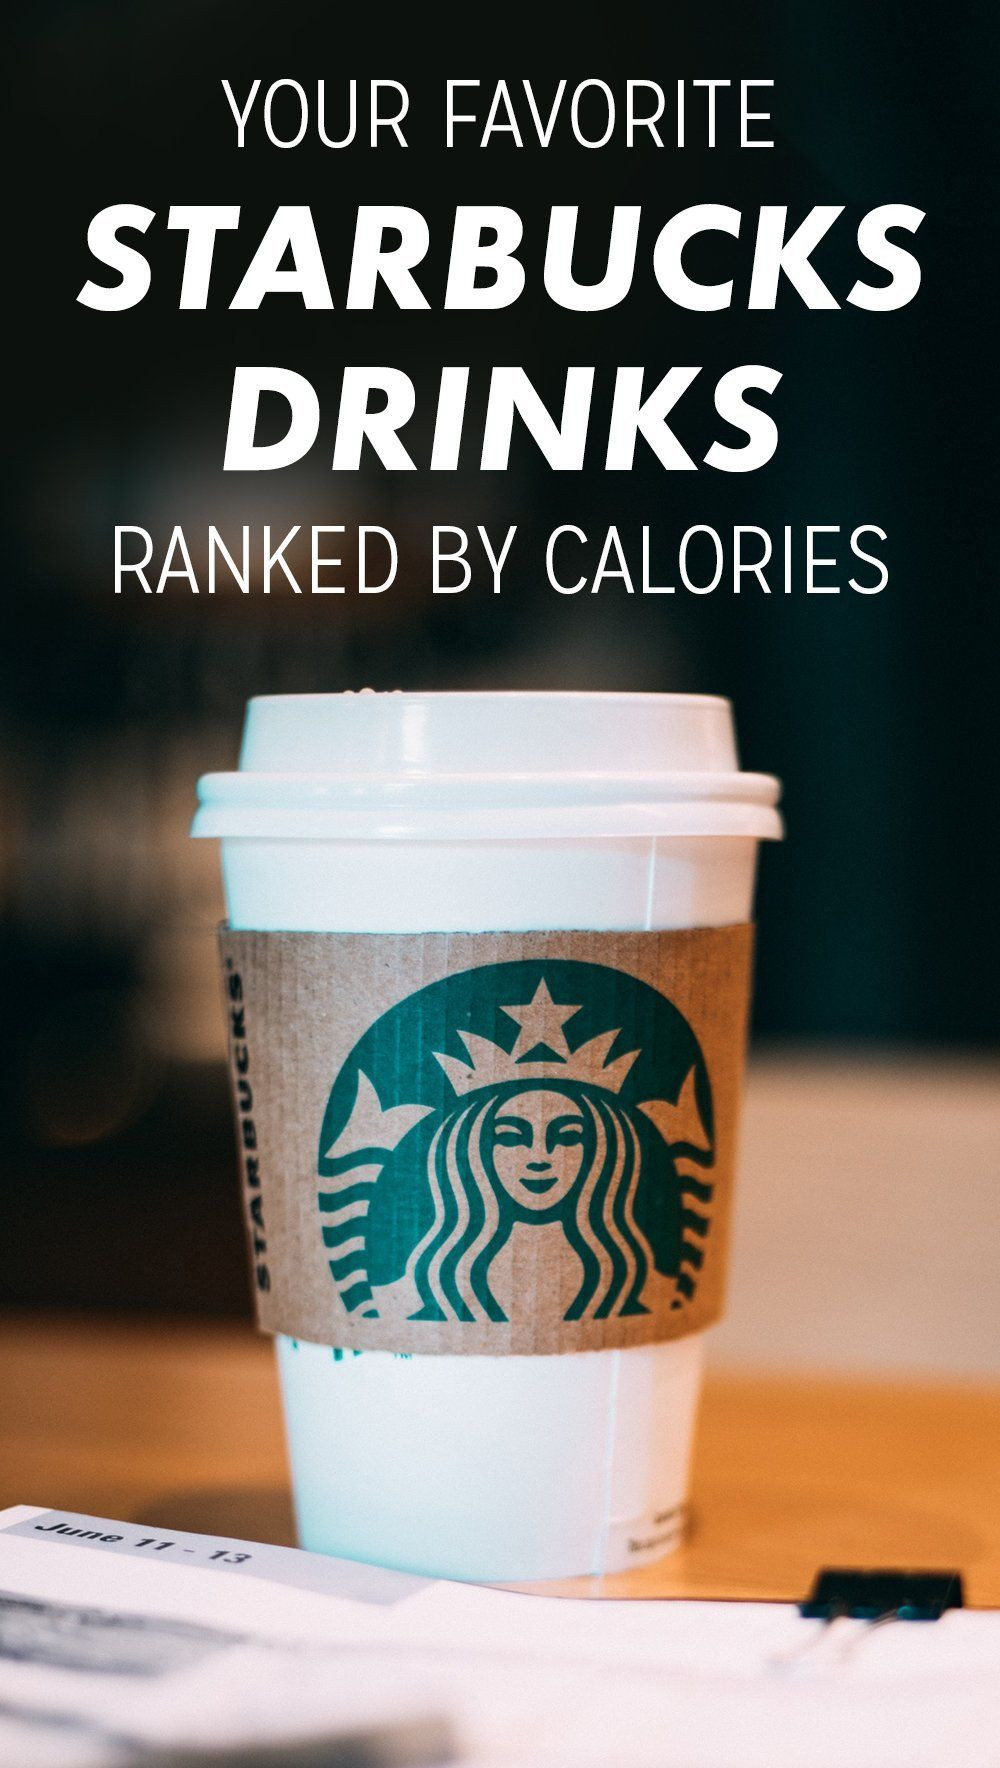 Healthy Starbucks Drinks Low Calories Diet
 Your Favorite Starbucks Drinks Ranked by Calories